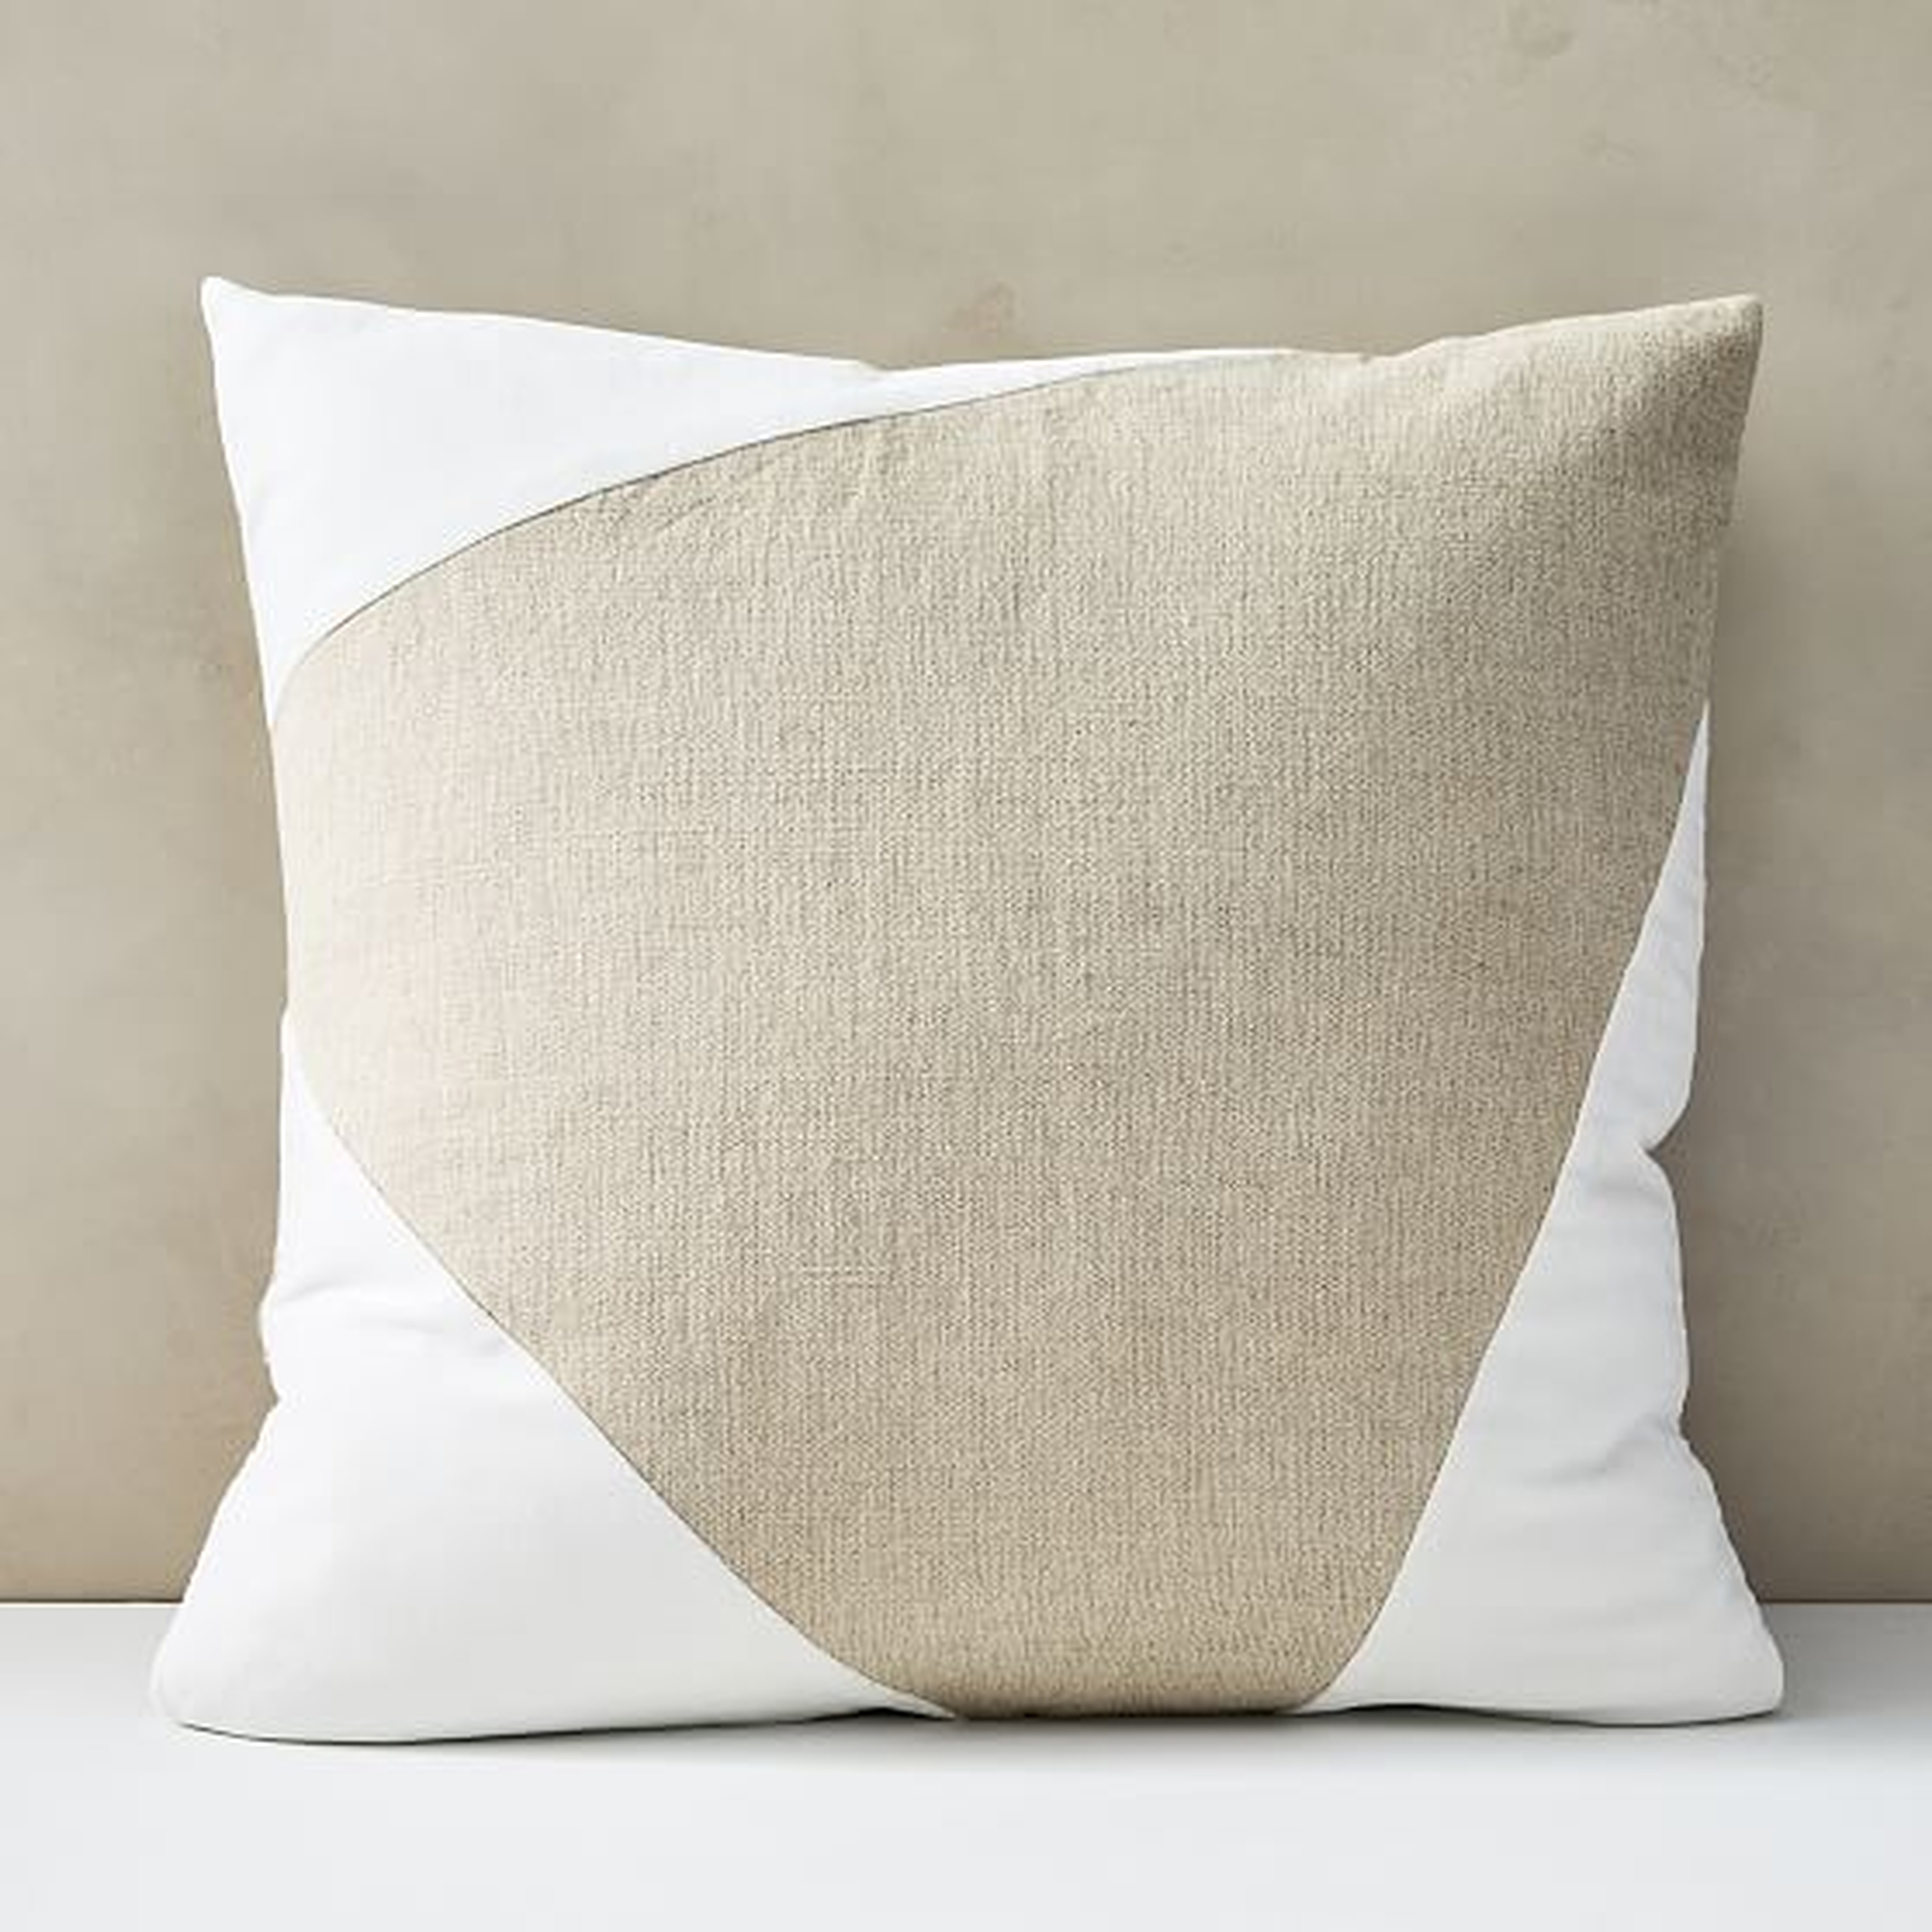 Cotton Linen + Velvet Corners Pillow Cover with Down Insert, Stone White, 24"x24" - West Elm